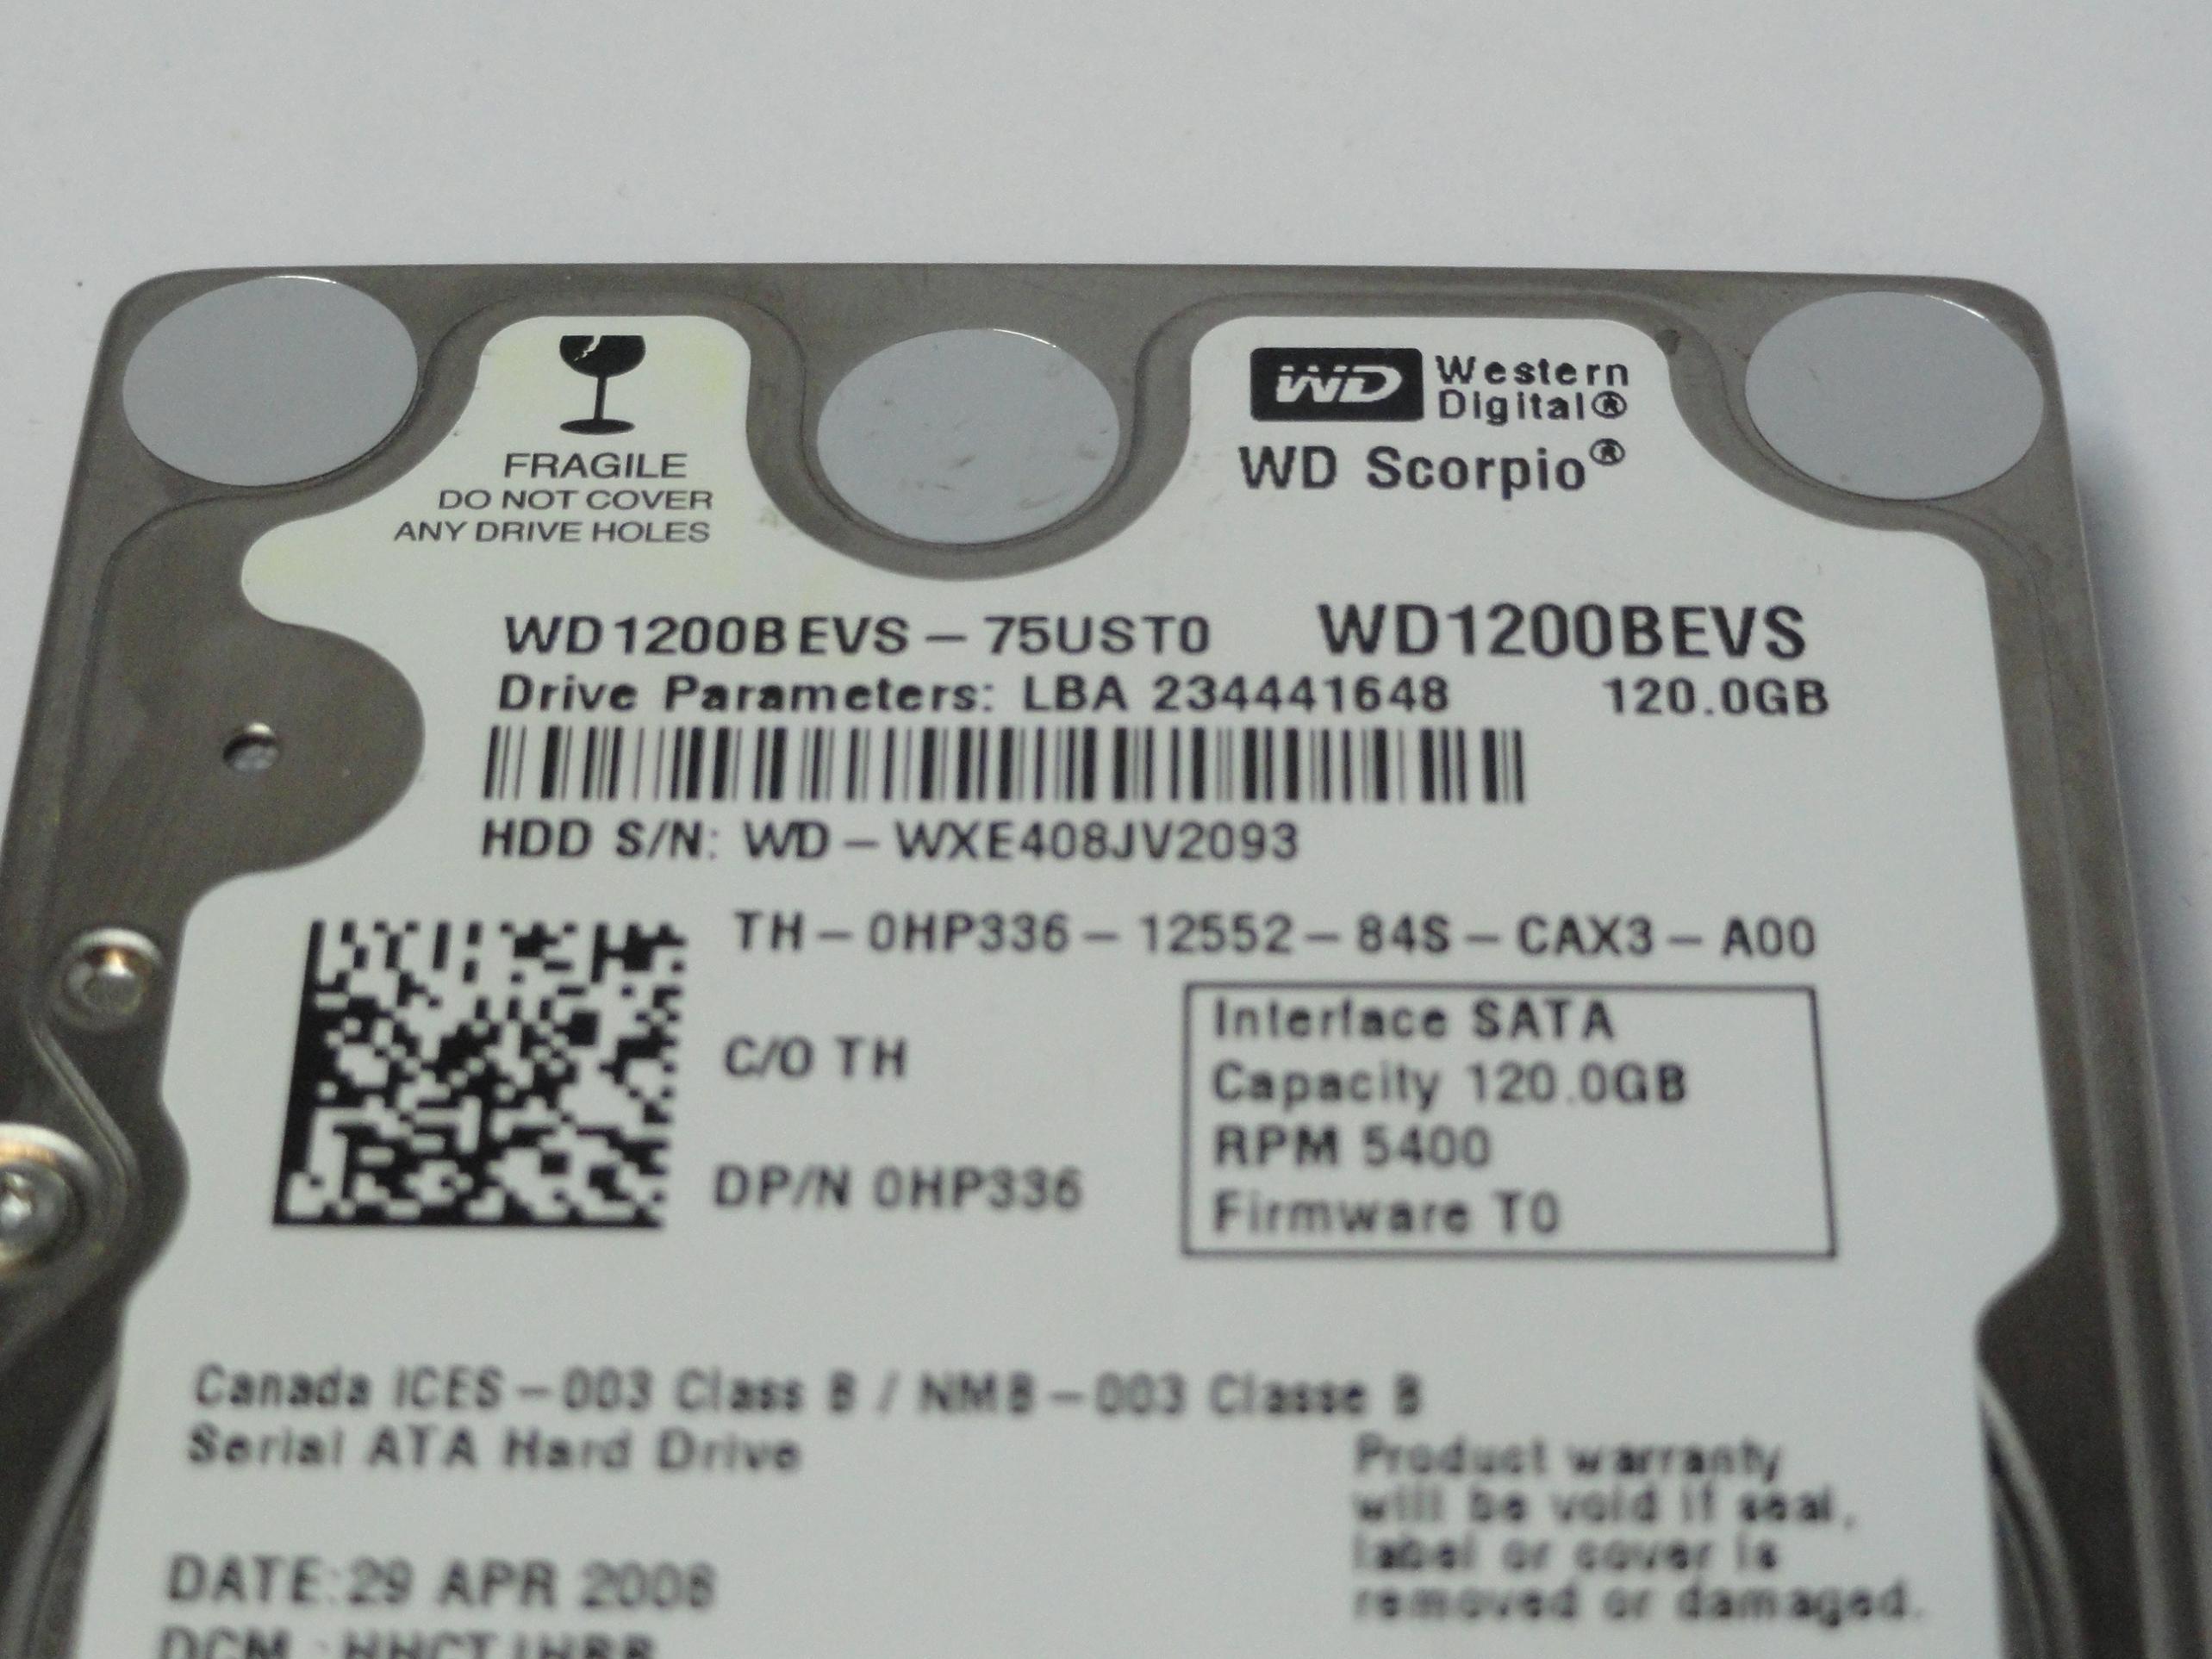 WD1200BEVS-75UST0 - Western Digital Dell 120Gb SATA 5400rpm 2.5in HDD - Refurbished